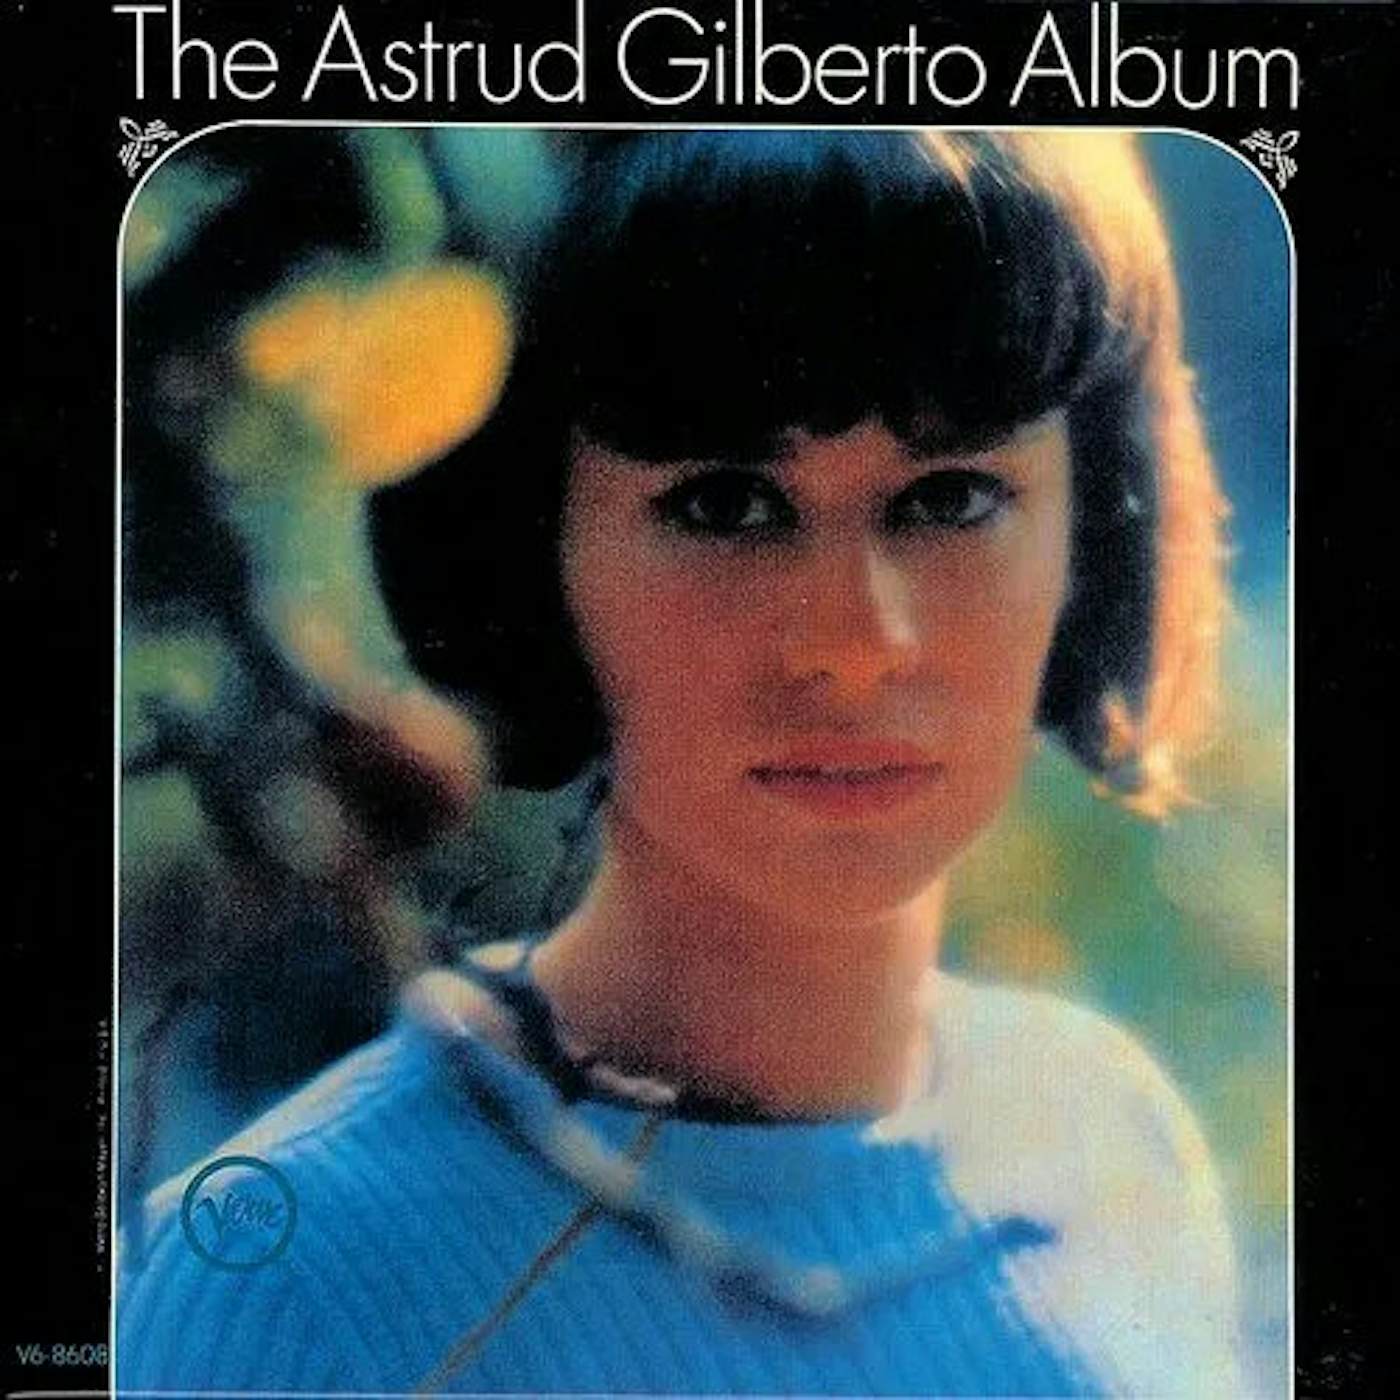 Astrud Gilberto Album Vinyl Record